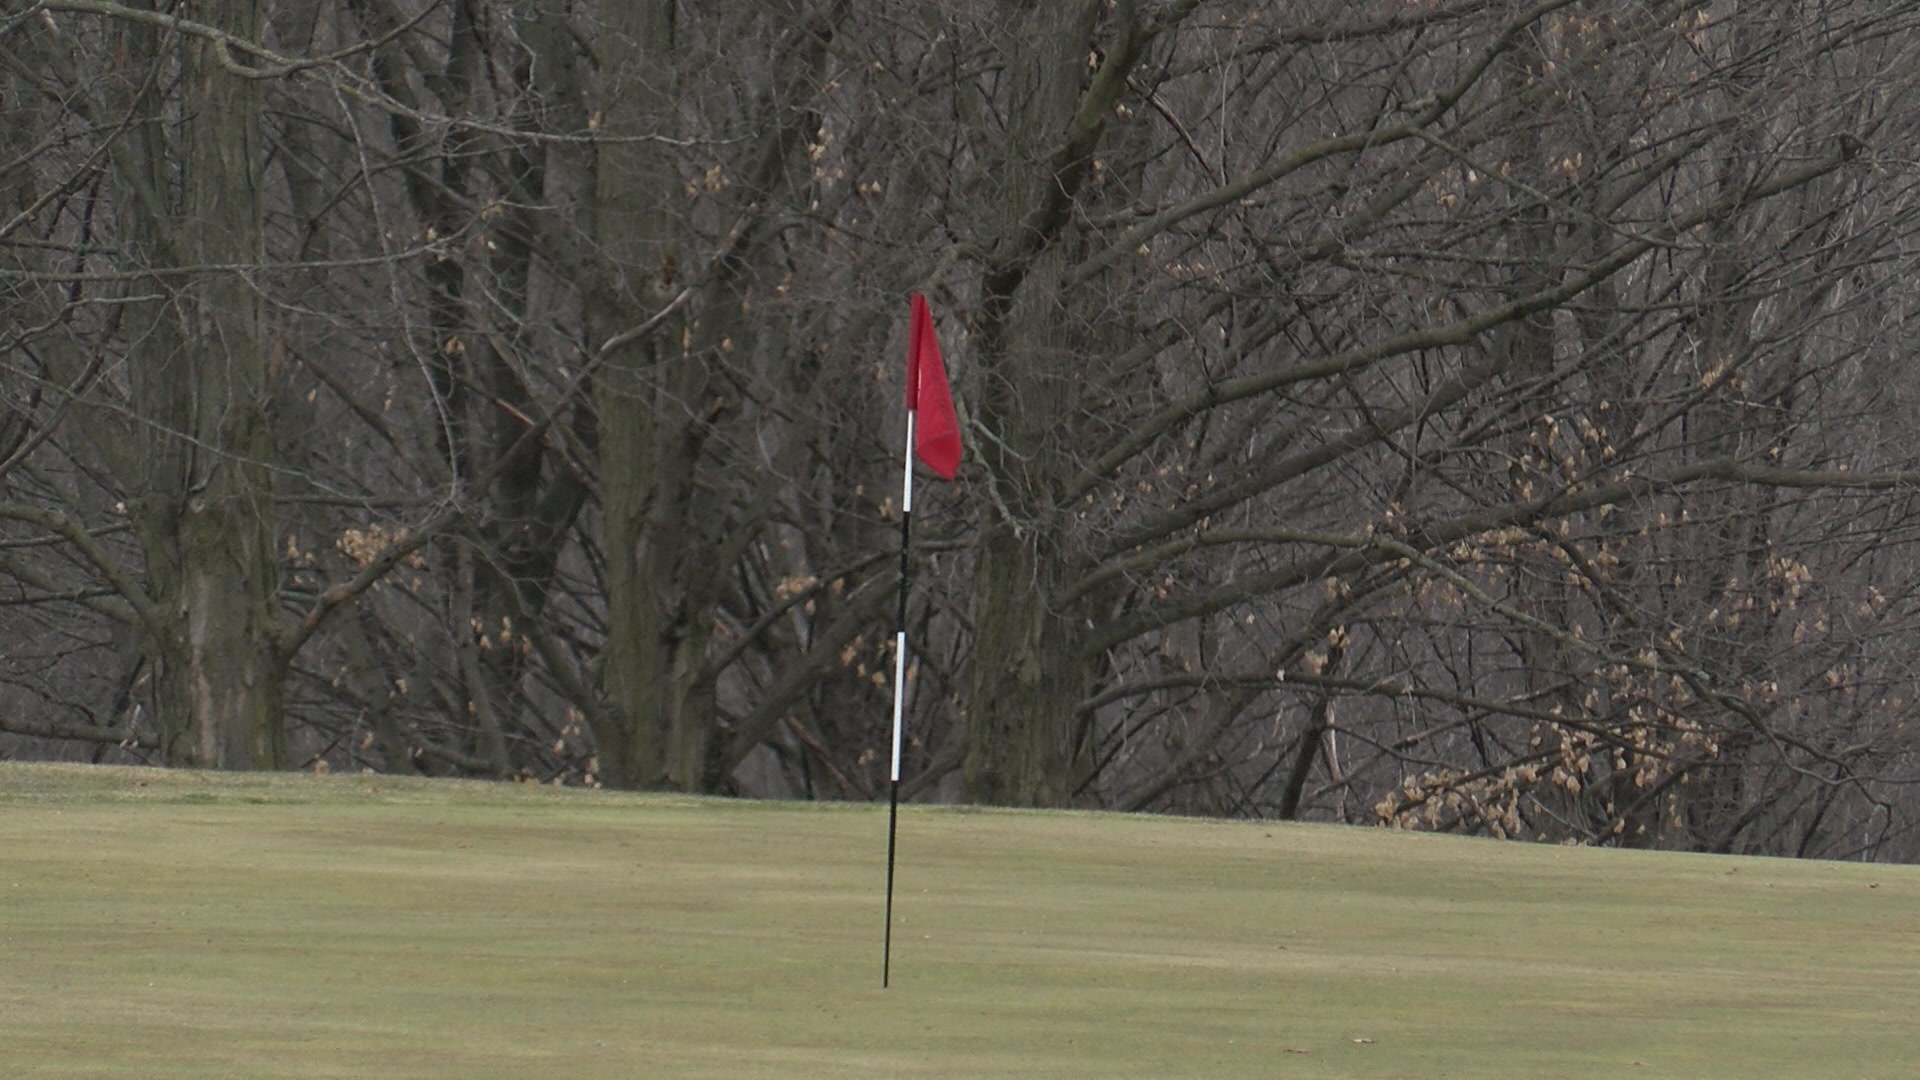 A rare February event: Milwaukee Co. to open 3 golf courses Sunday-Tuesday